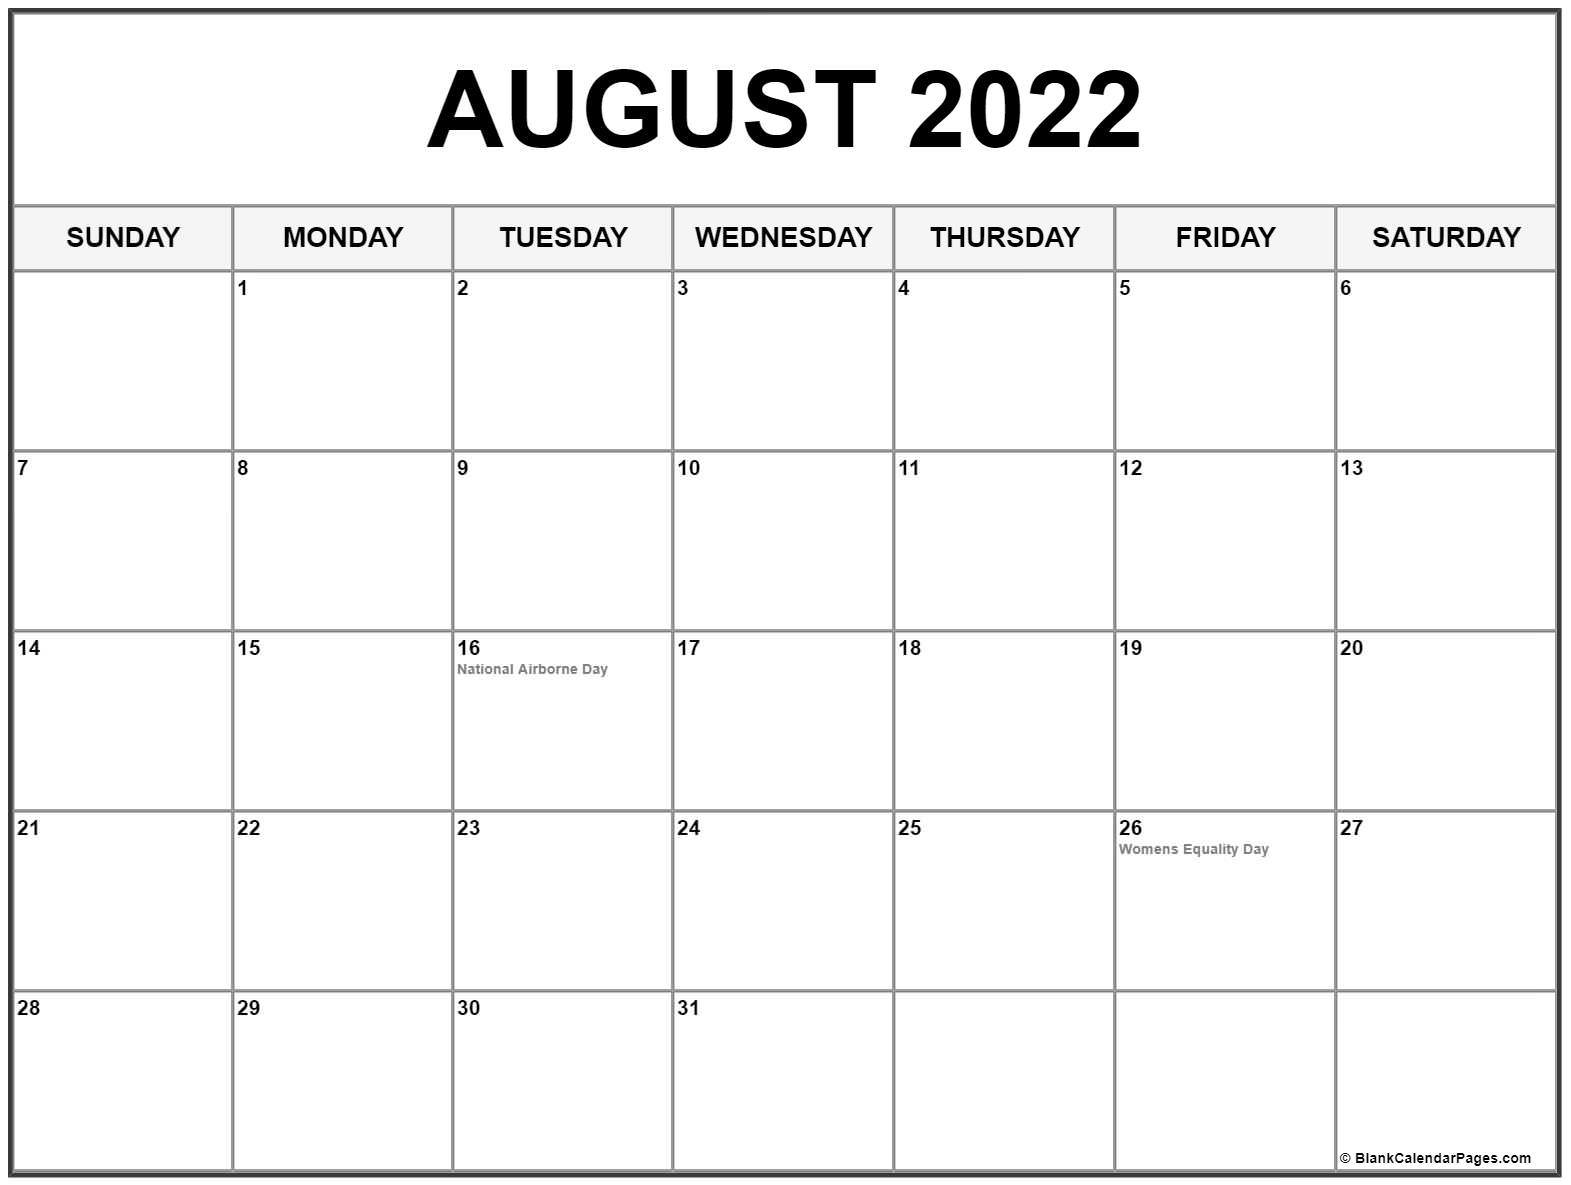 August 2022 Holidays Calendar